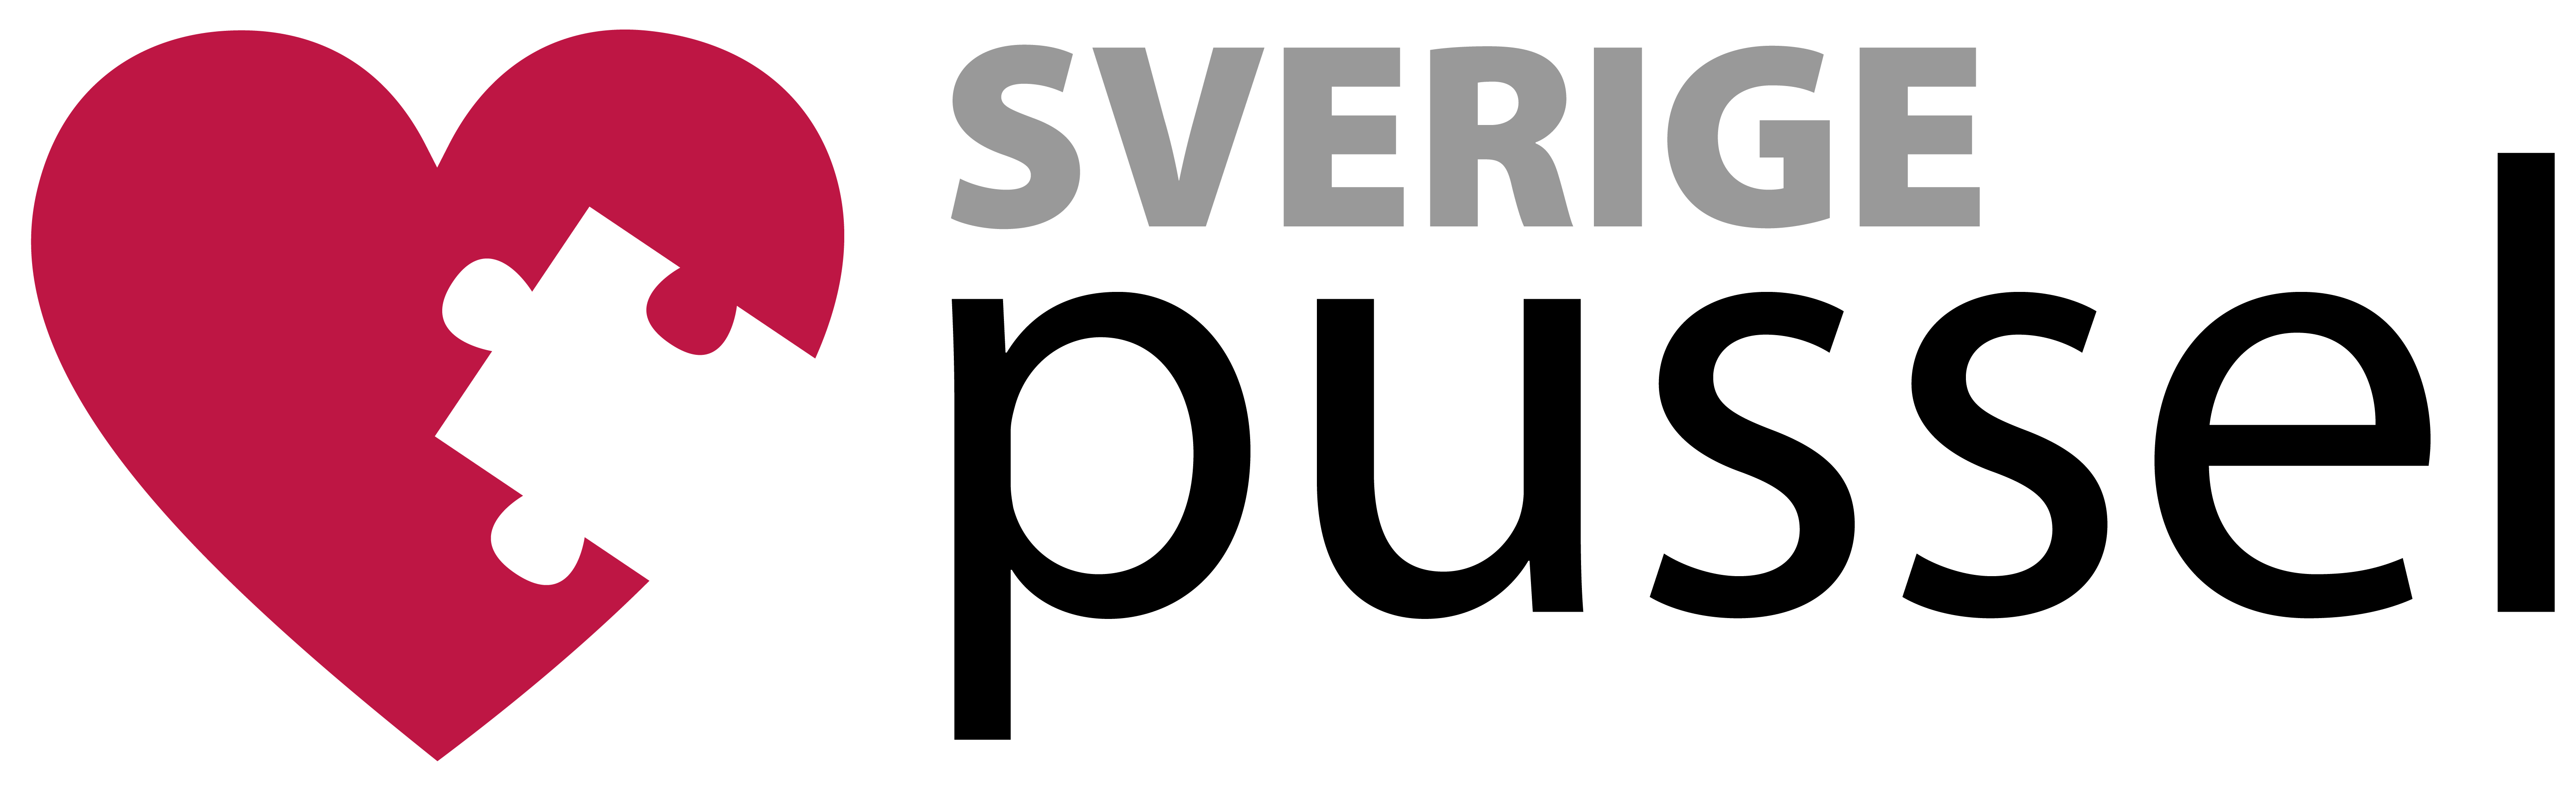 Sverigepussel